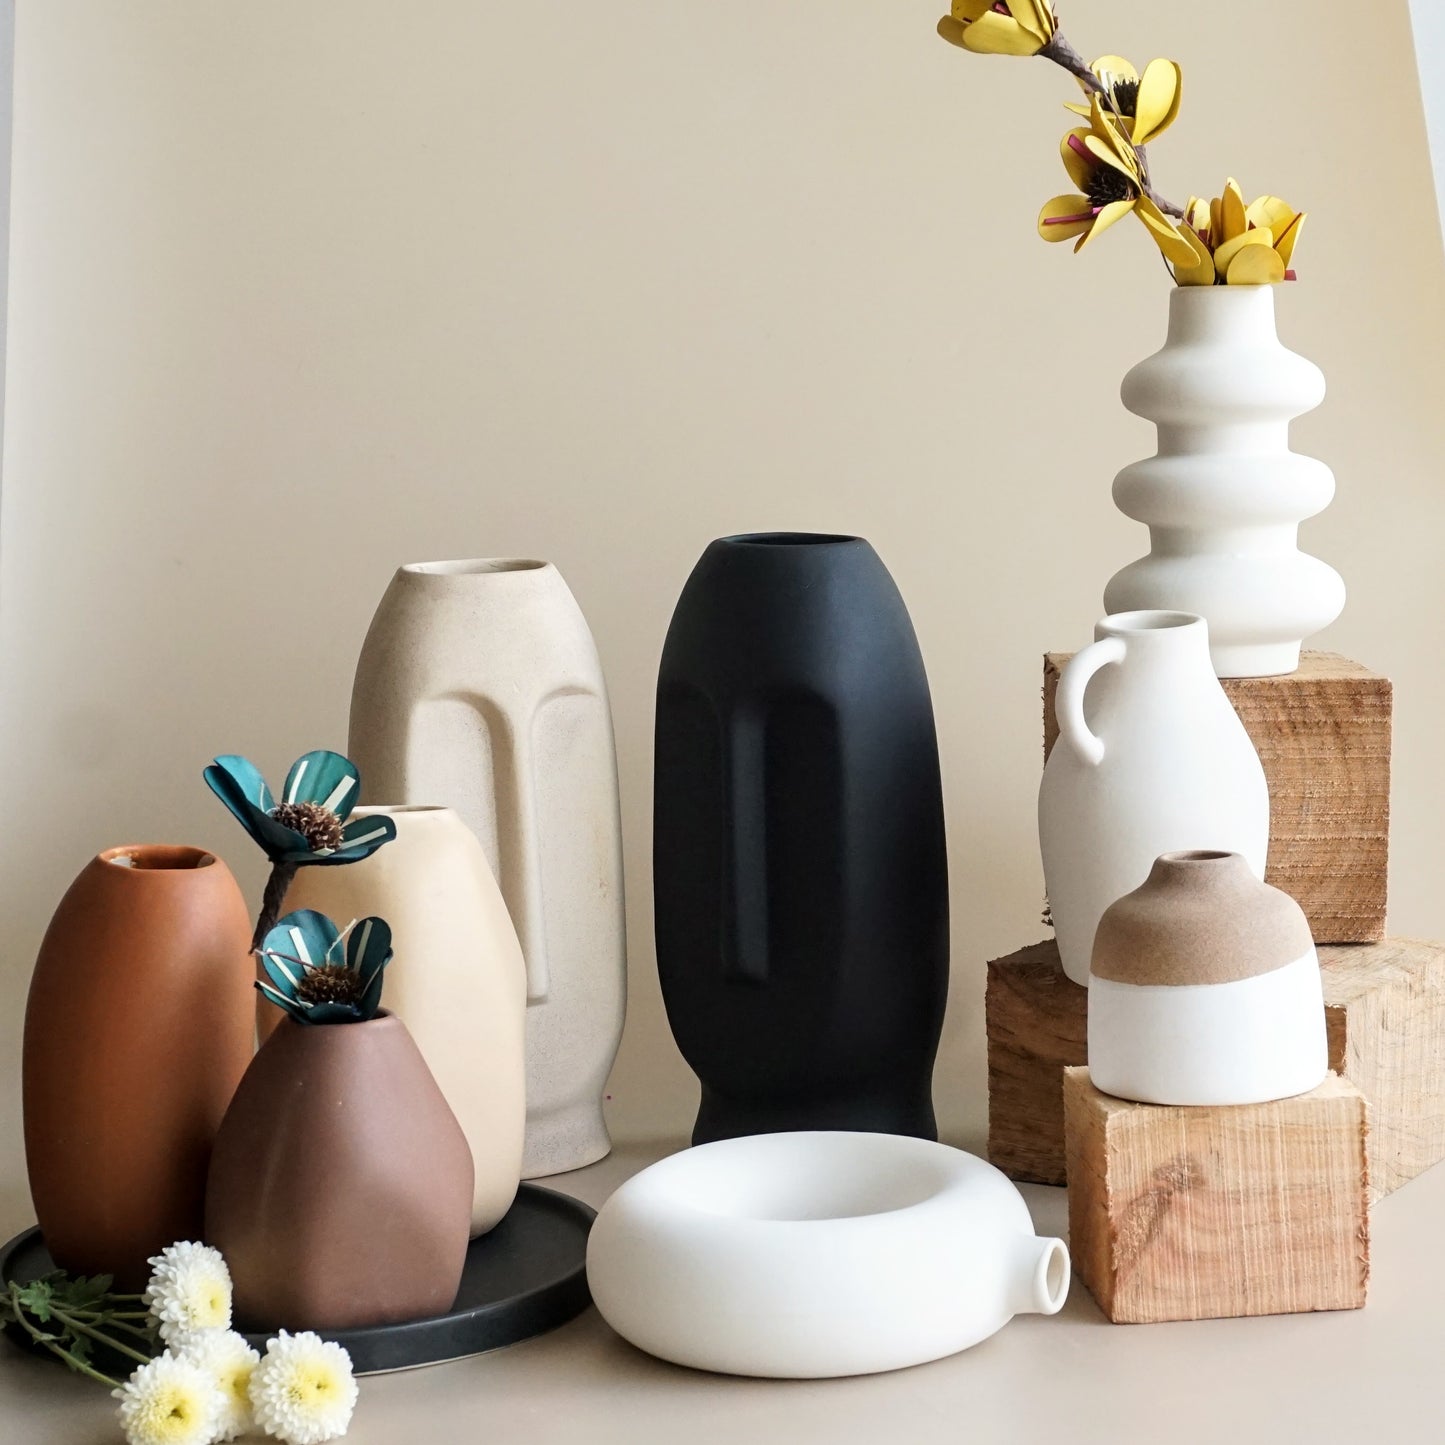 Trending Set of 9 Vases | Grab Dried Leaves Bunch FREE